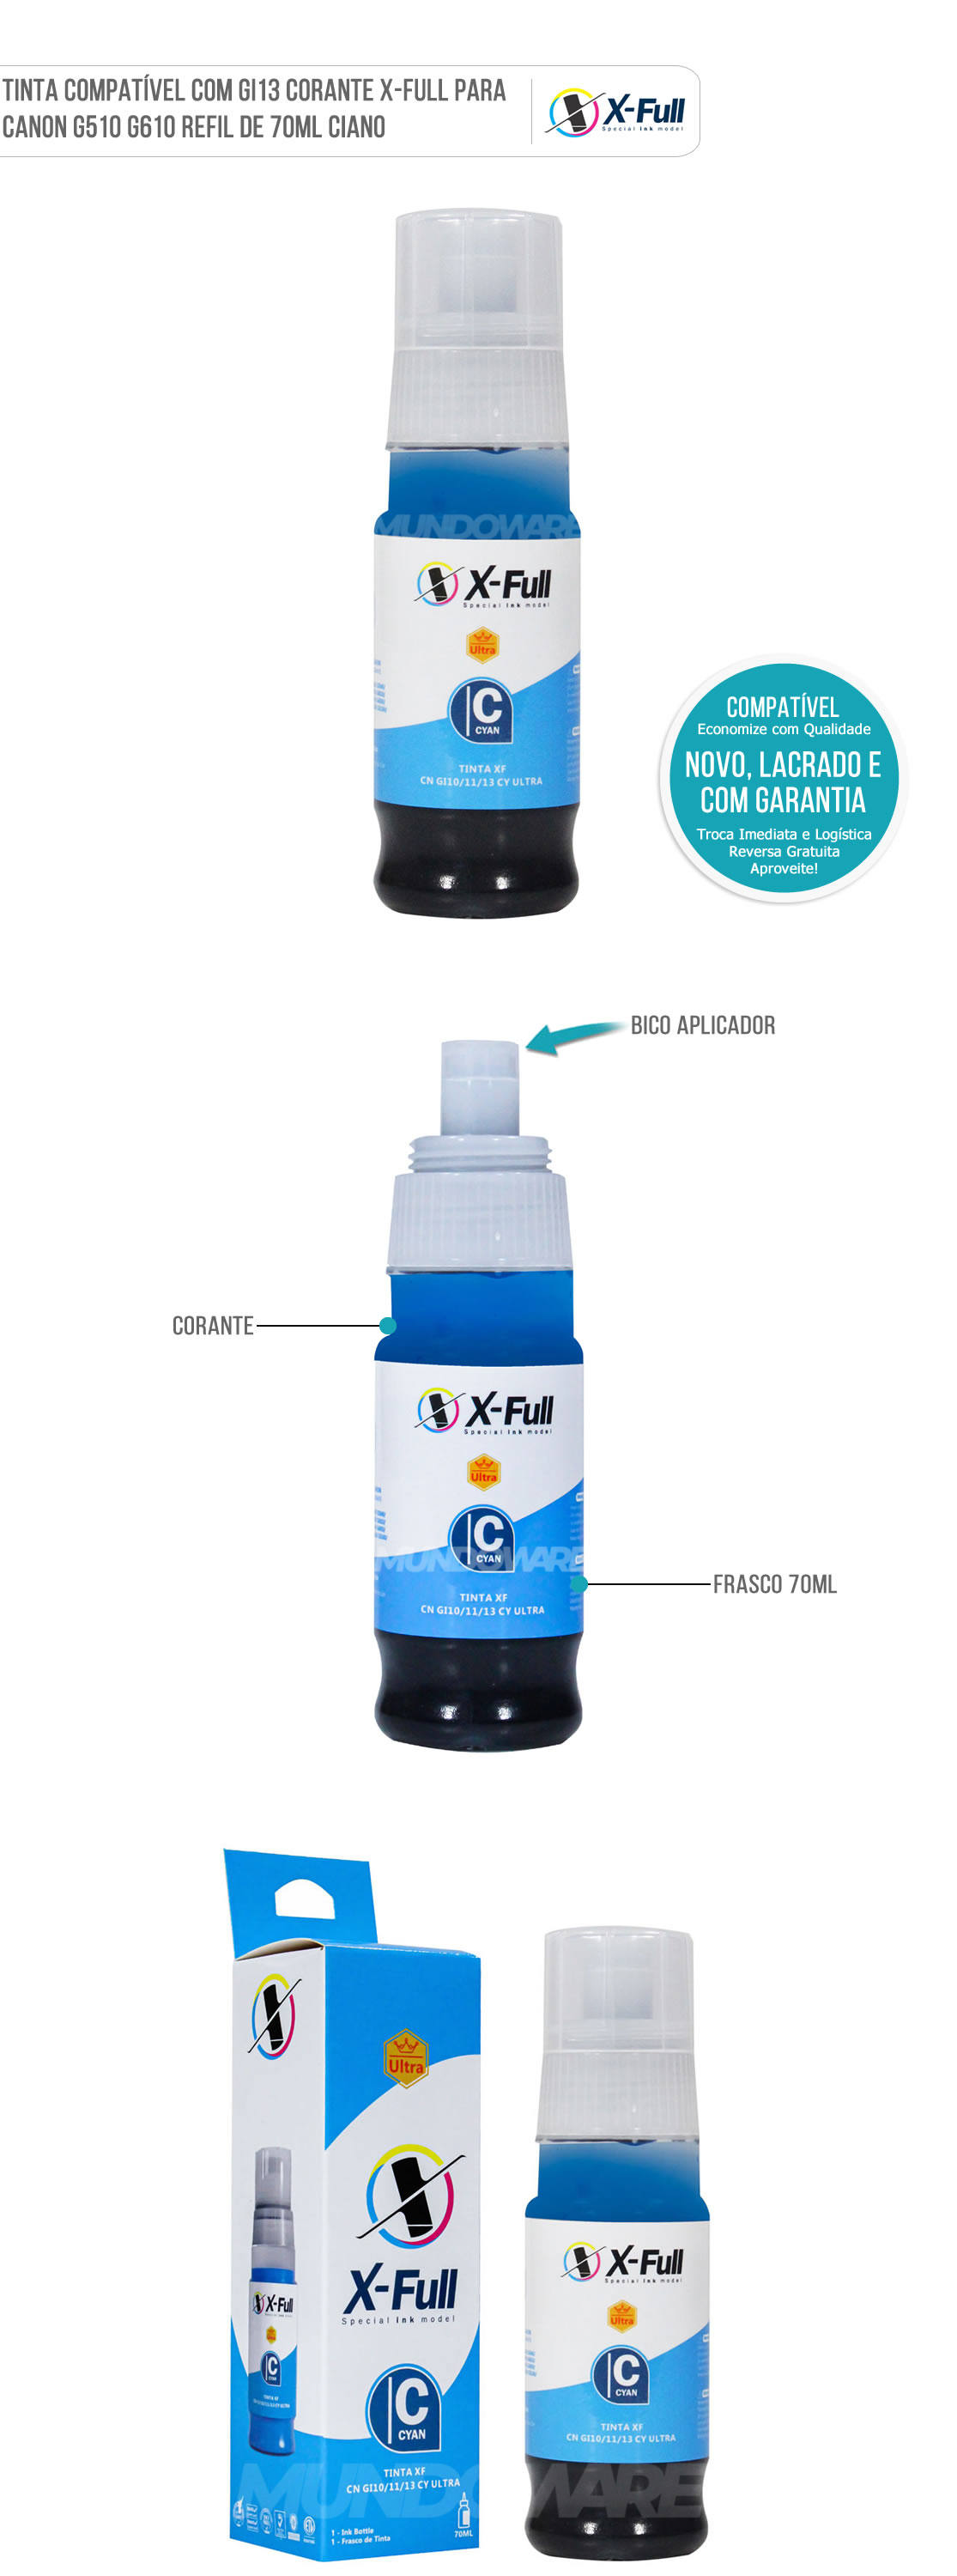 Tinta X-Full Compatvel com GI13 GI-13 Ciano Corante para Impressoras Canon G510 G610 G-510 G-610 Garrafa de 70ml